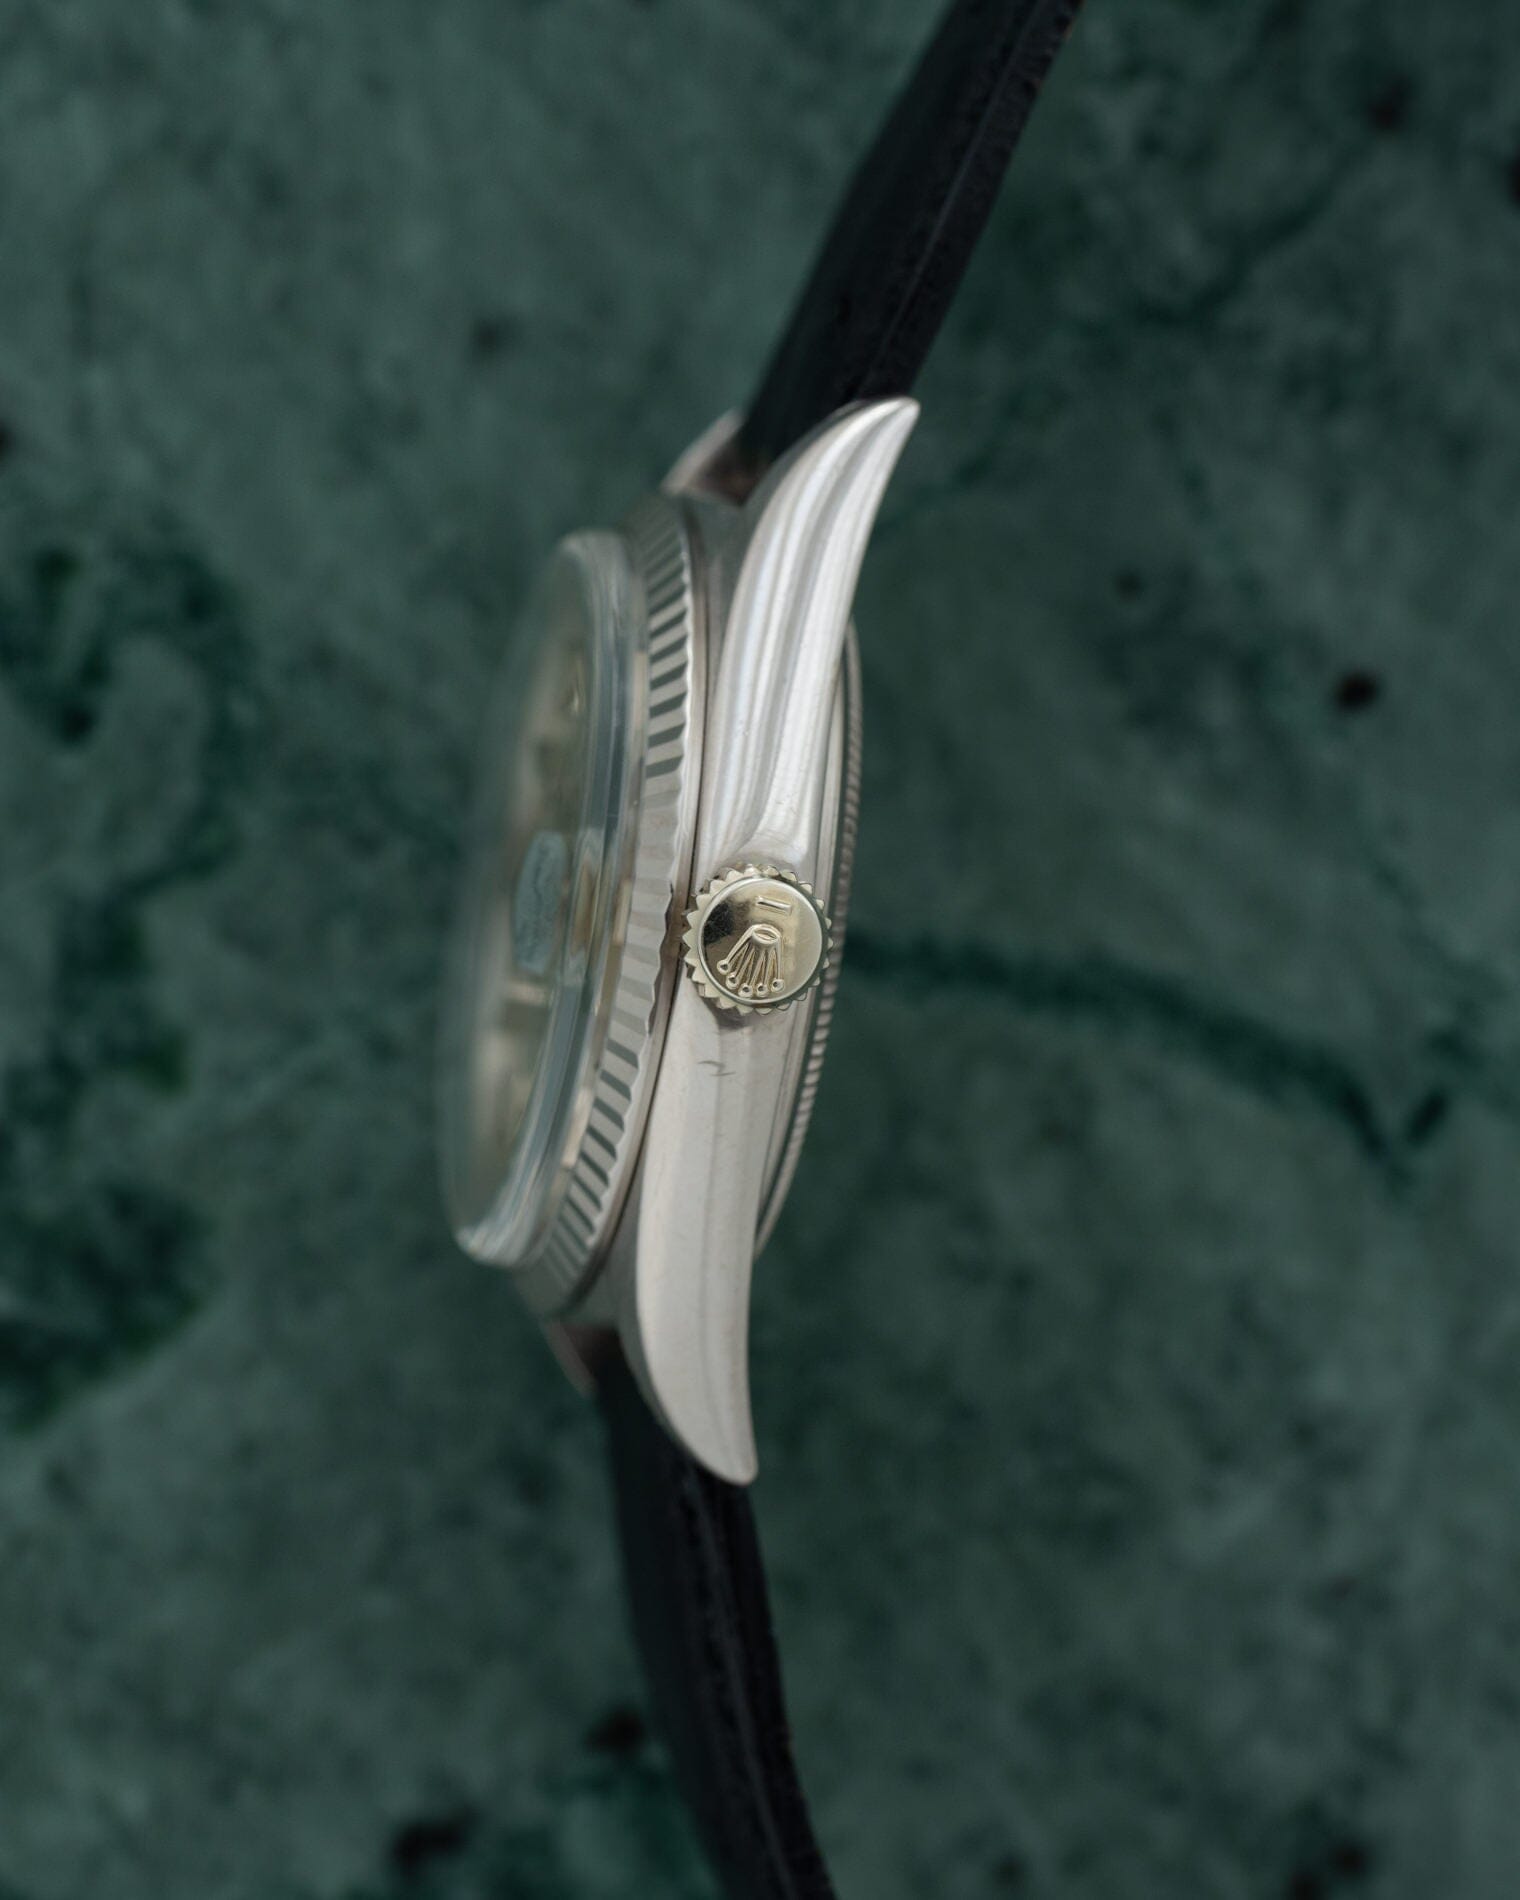 Rolex デイデイト 1803 WG シルバーダイアル Watch ROLEX 